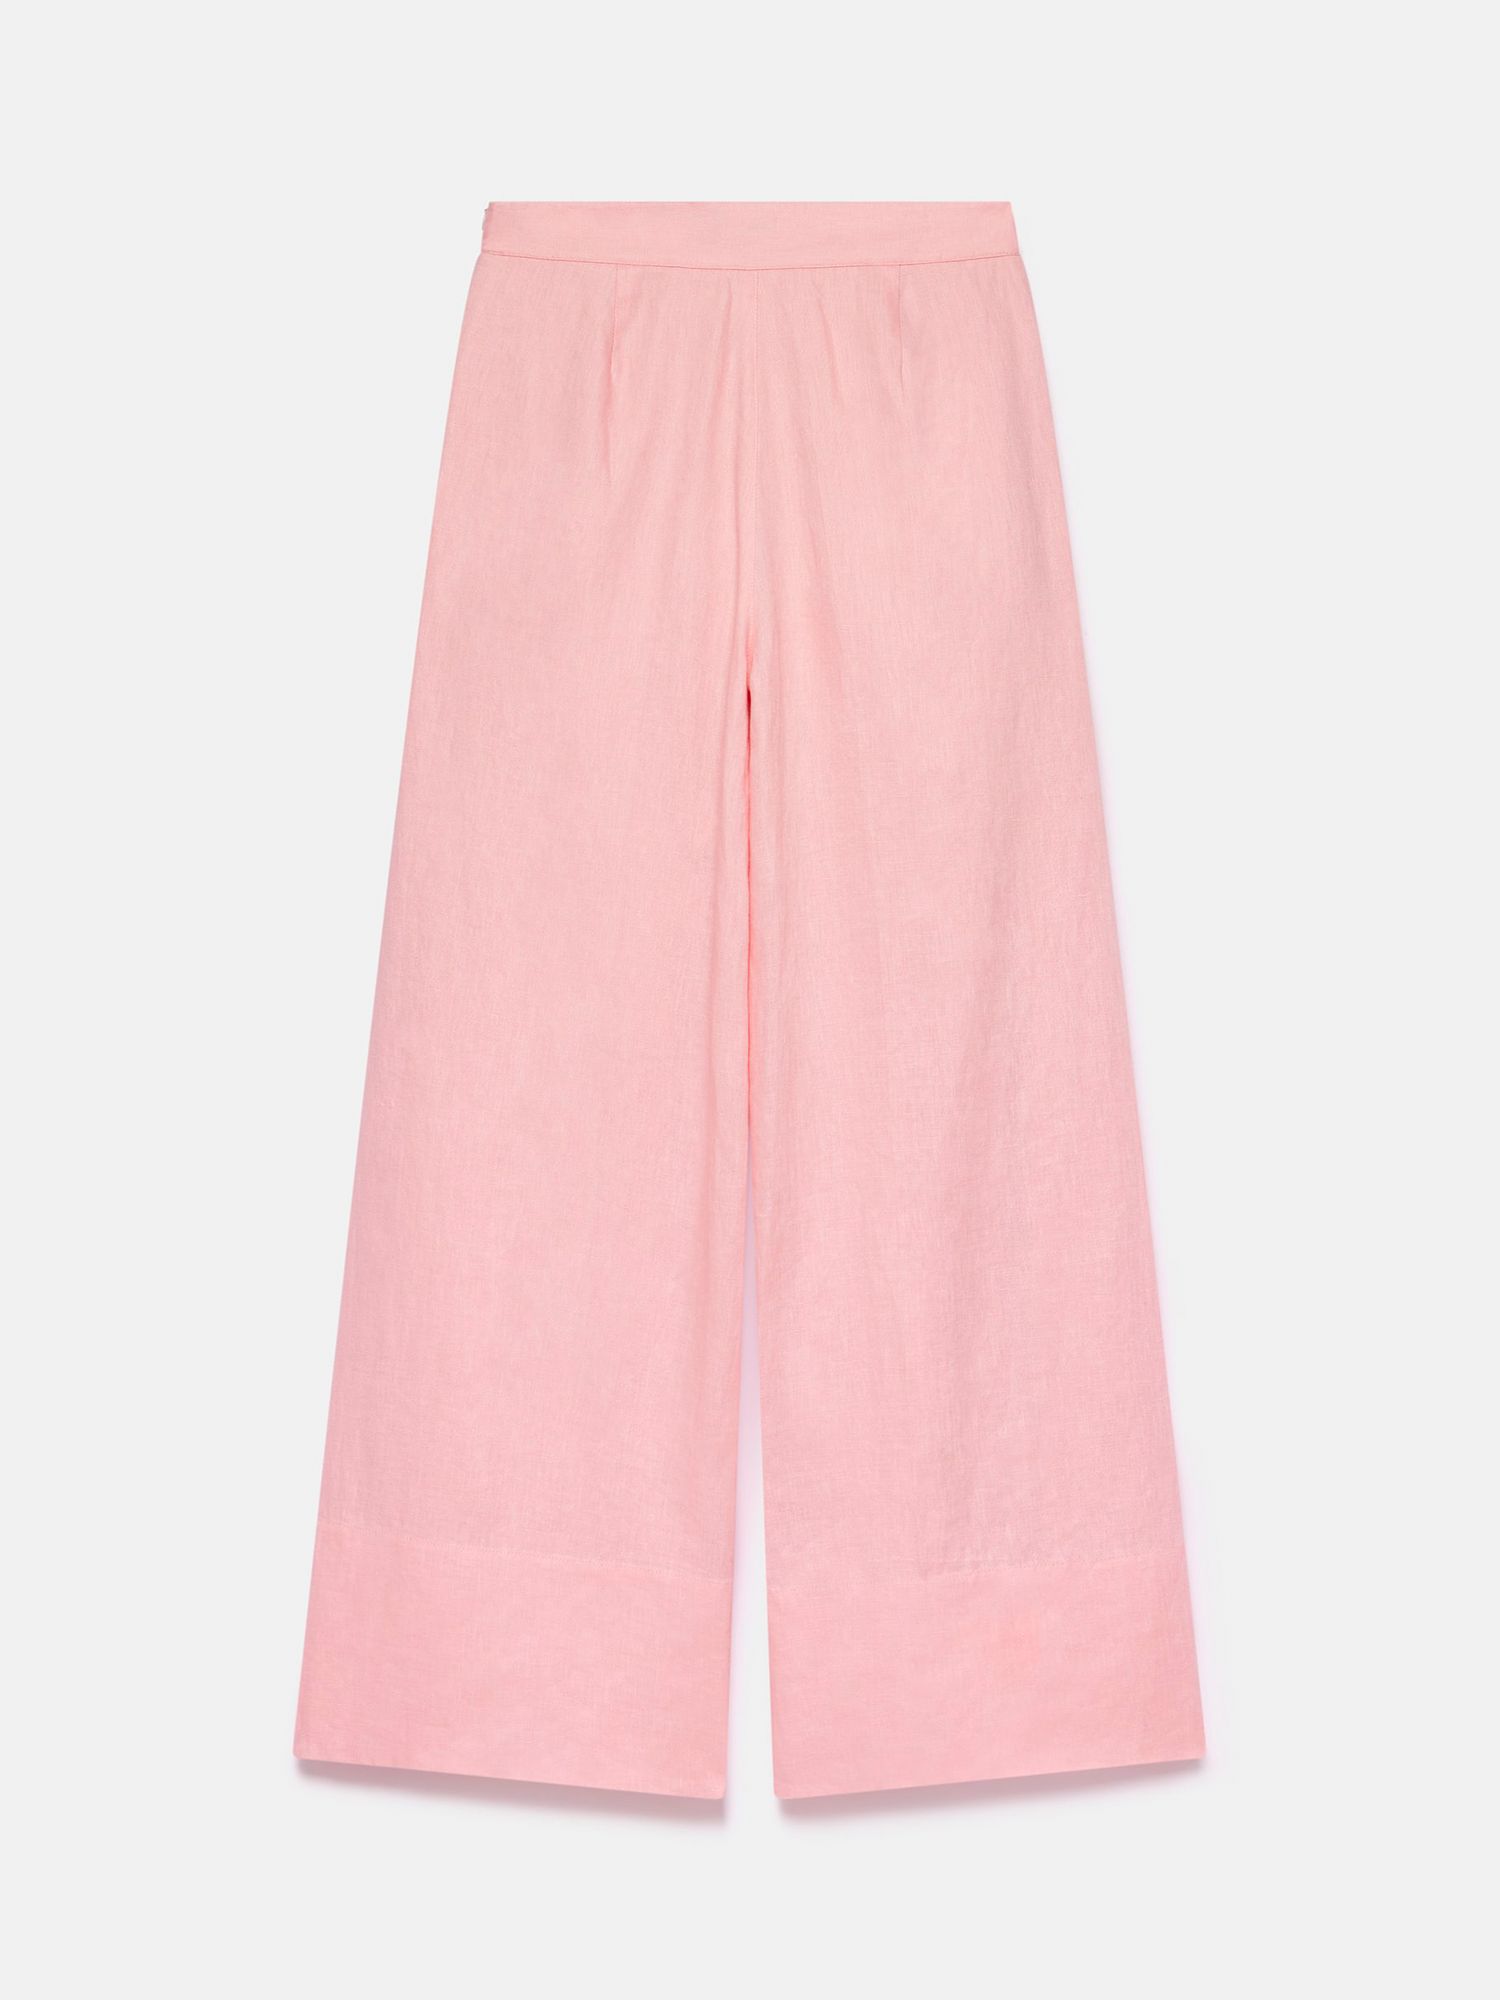 Mint Velvet Linen Wide Leg Trousers, Pink, 6R